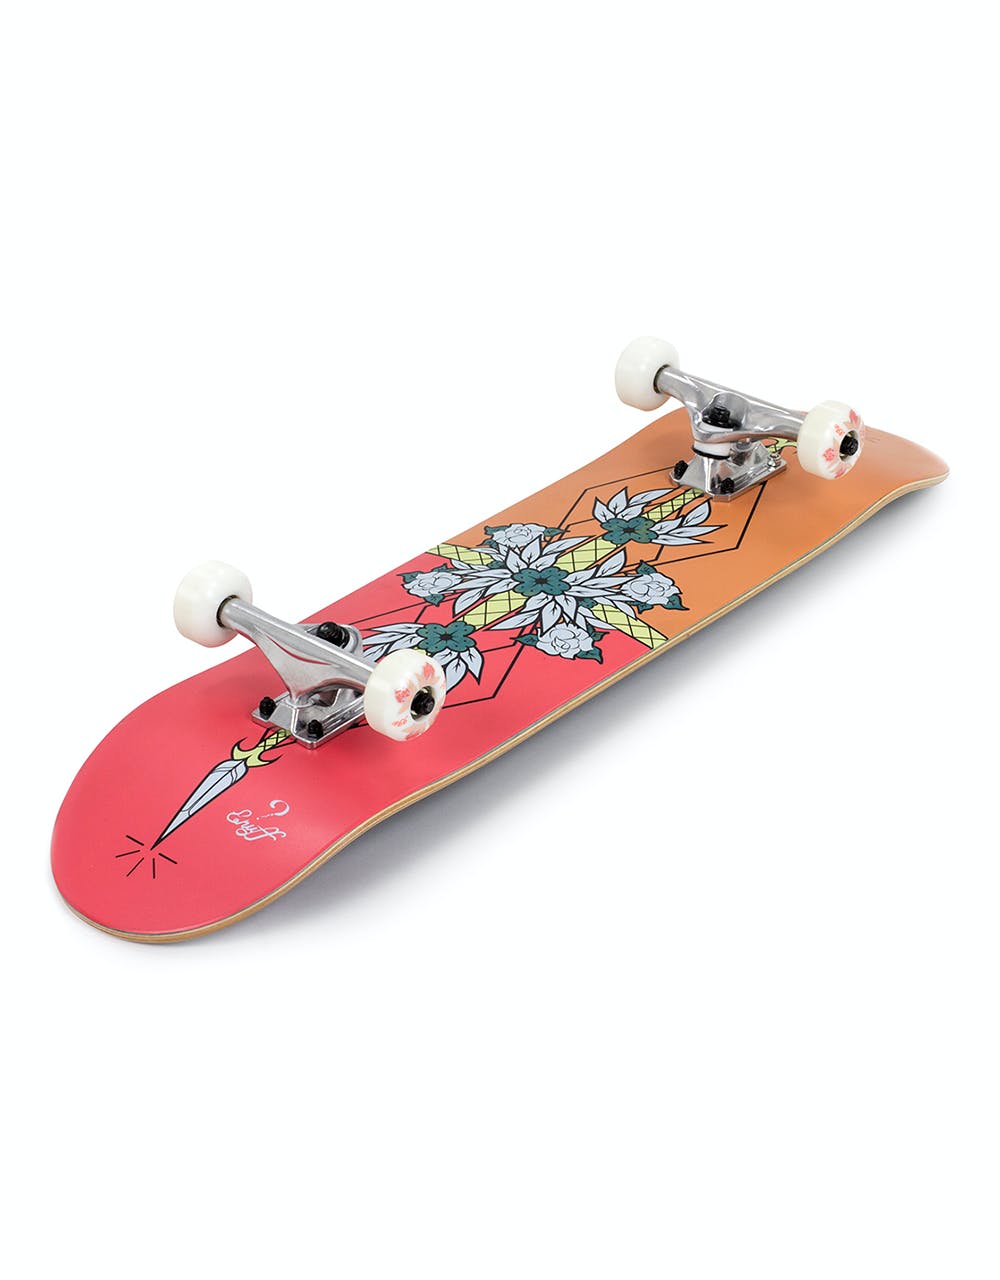 Enuff Flash Complete Skateboard - 8"